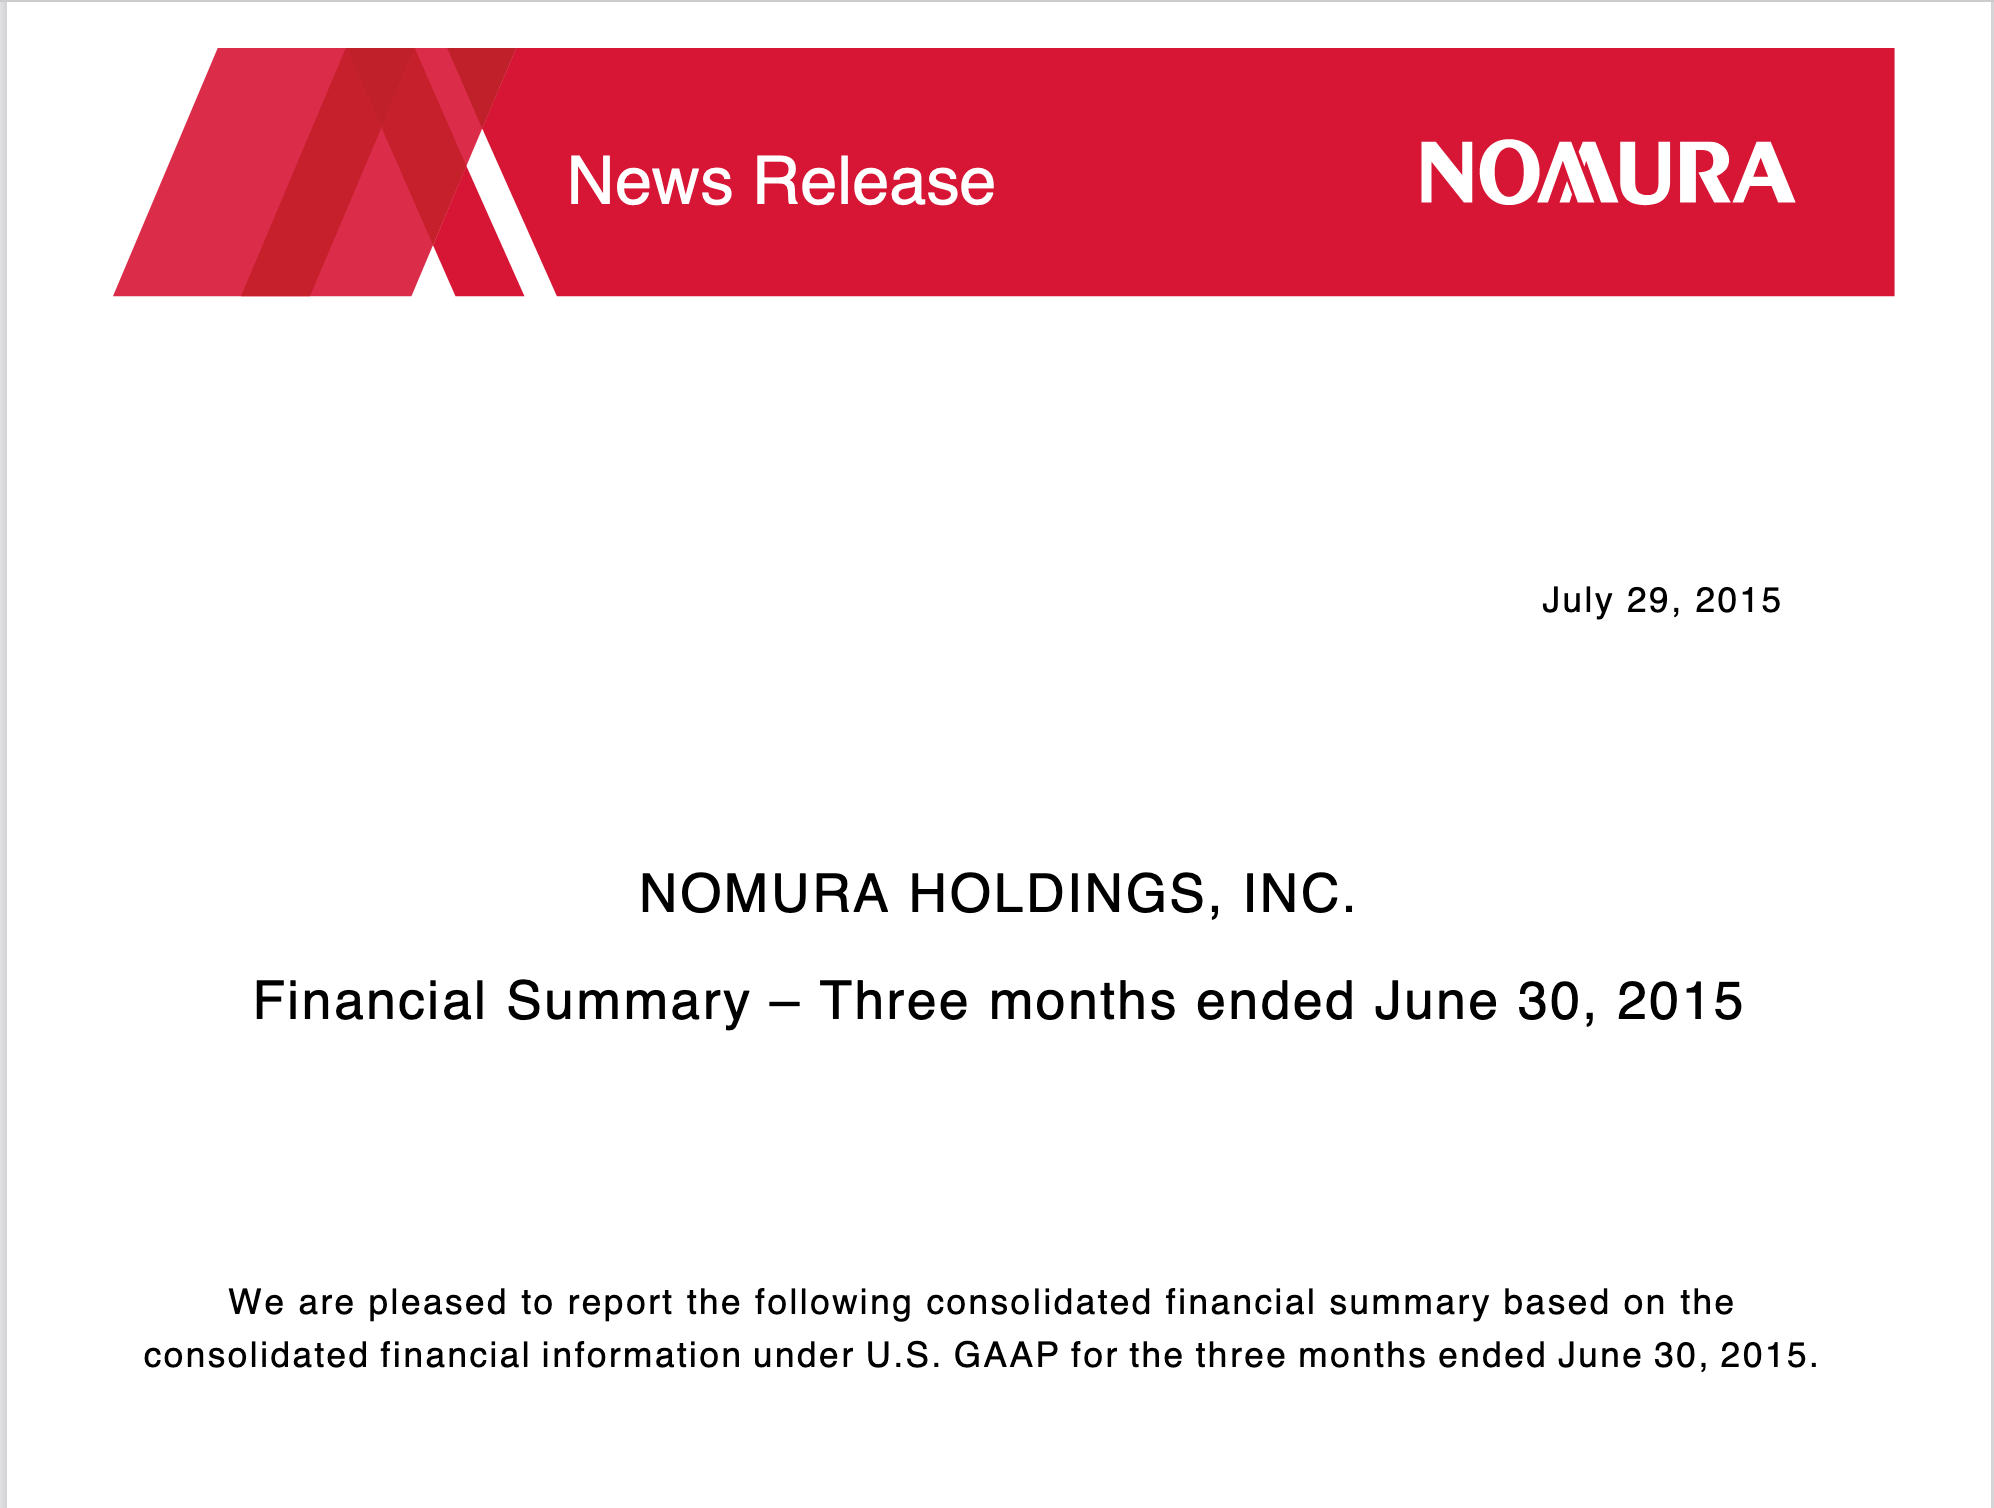 Nomura Financial Holdings Inc. Financial Summary Report